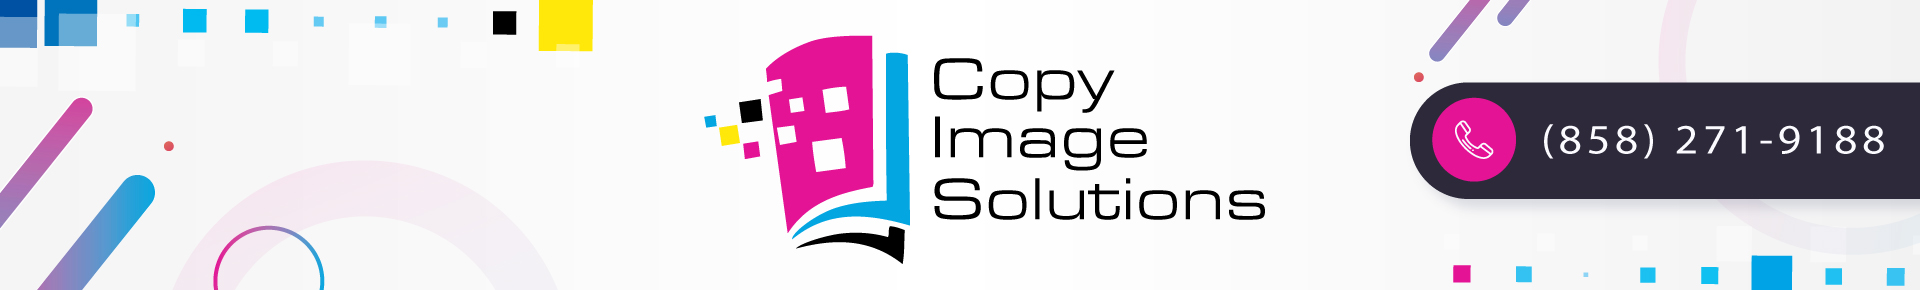 Copy-Image-Solutions Header